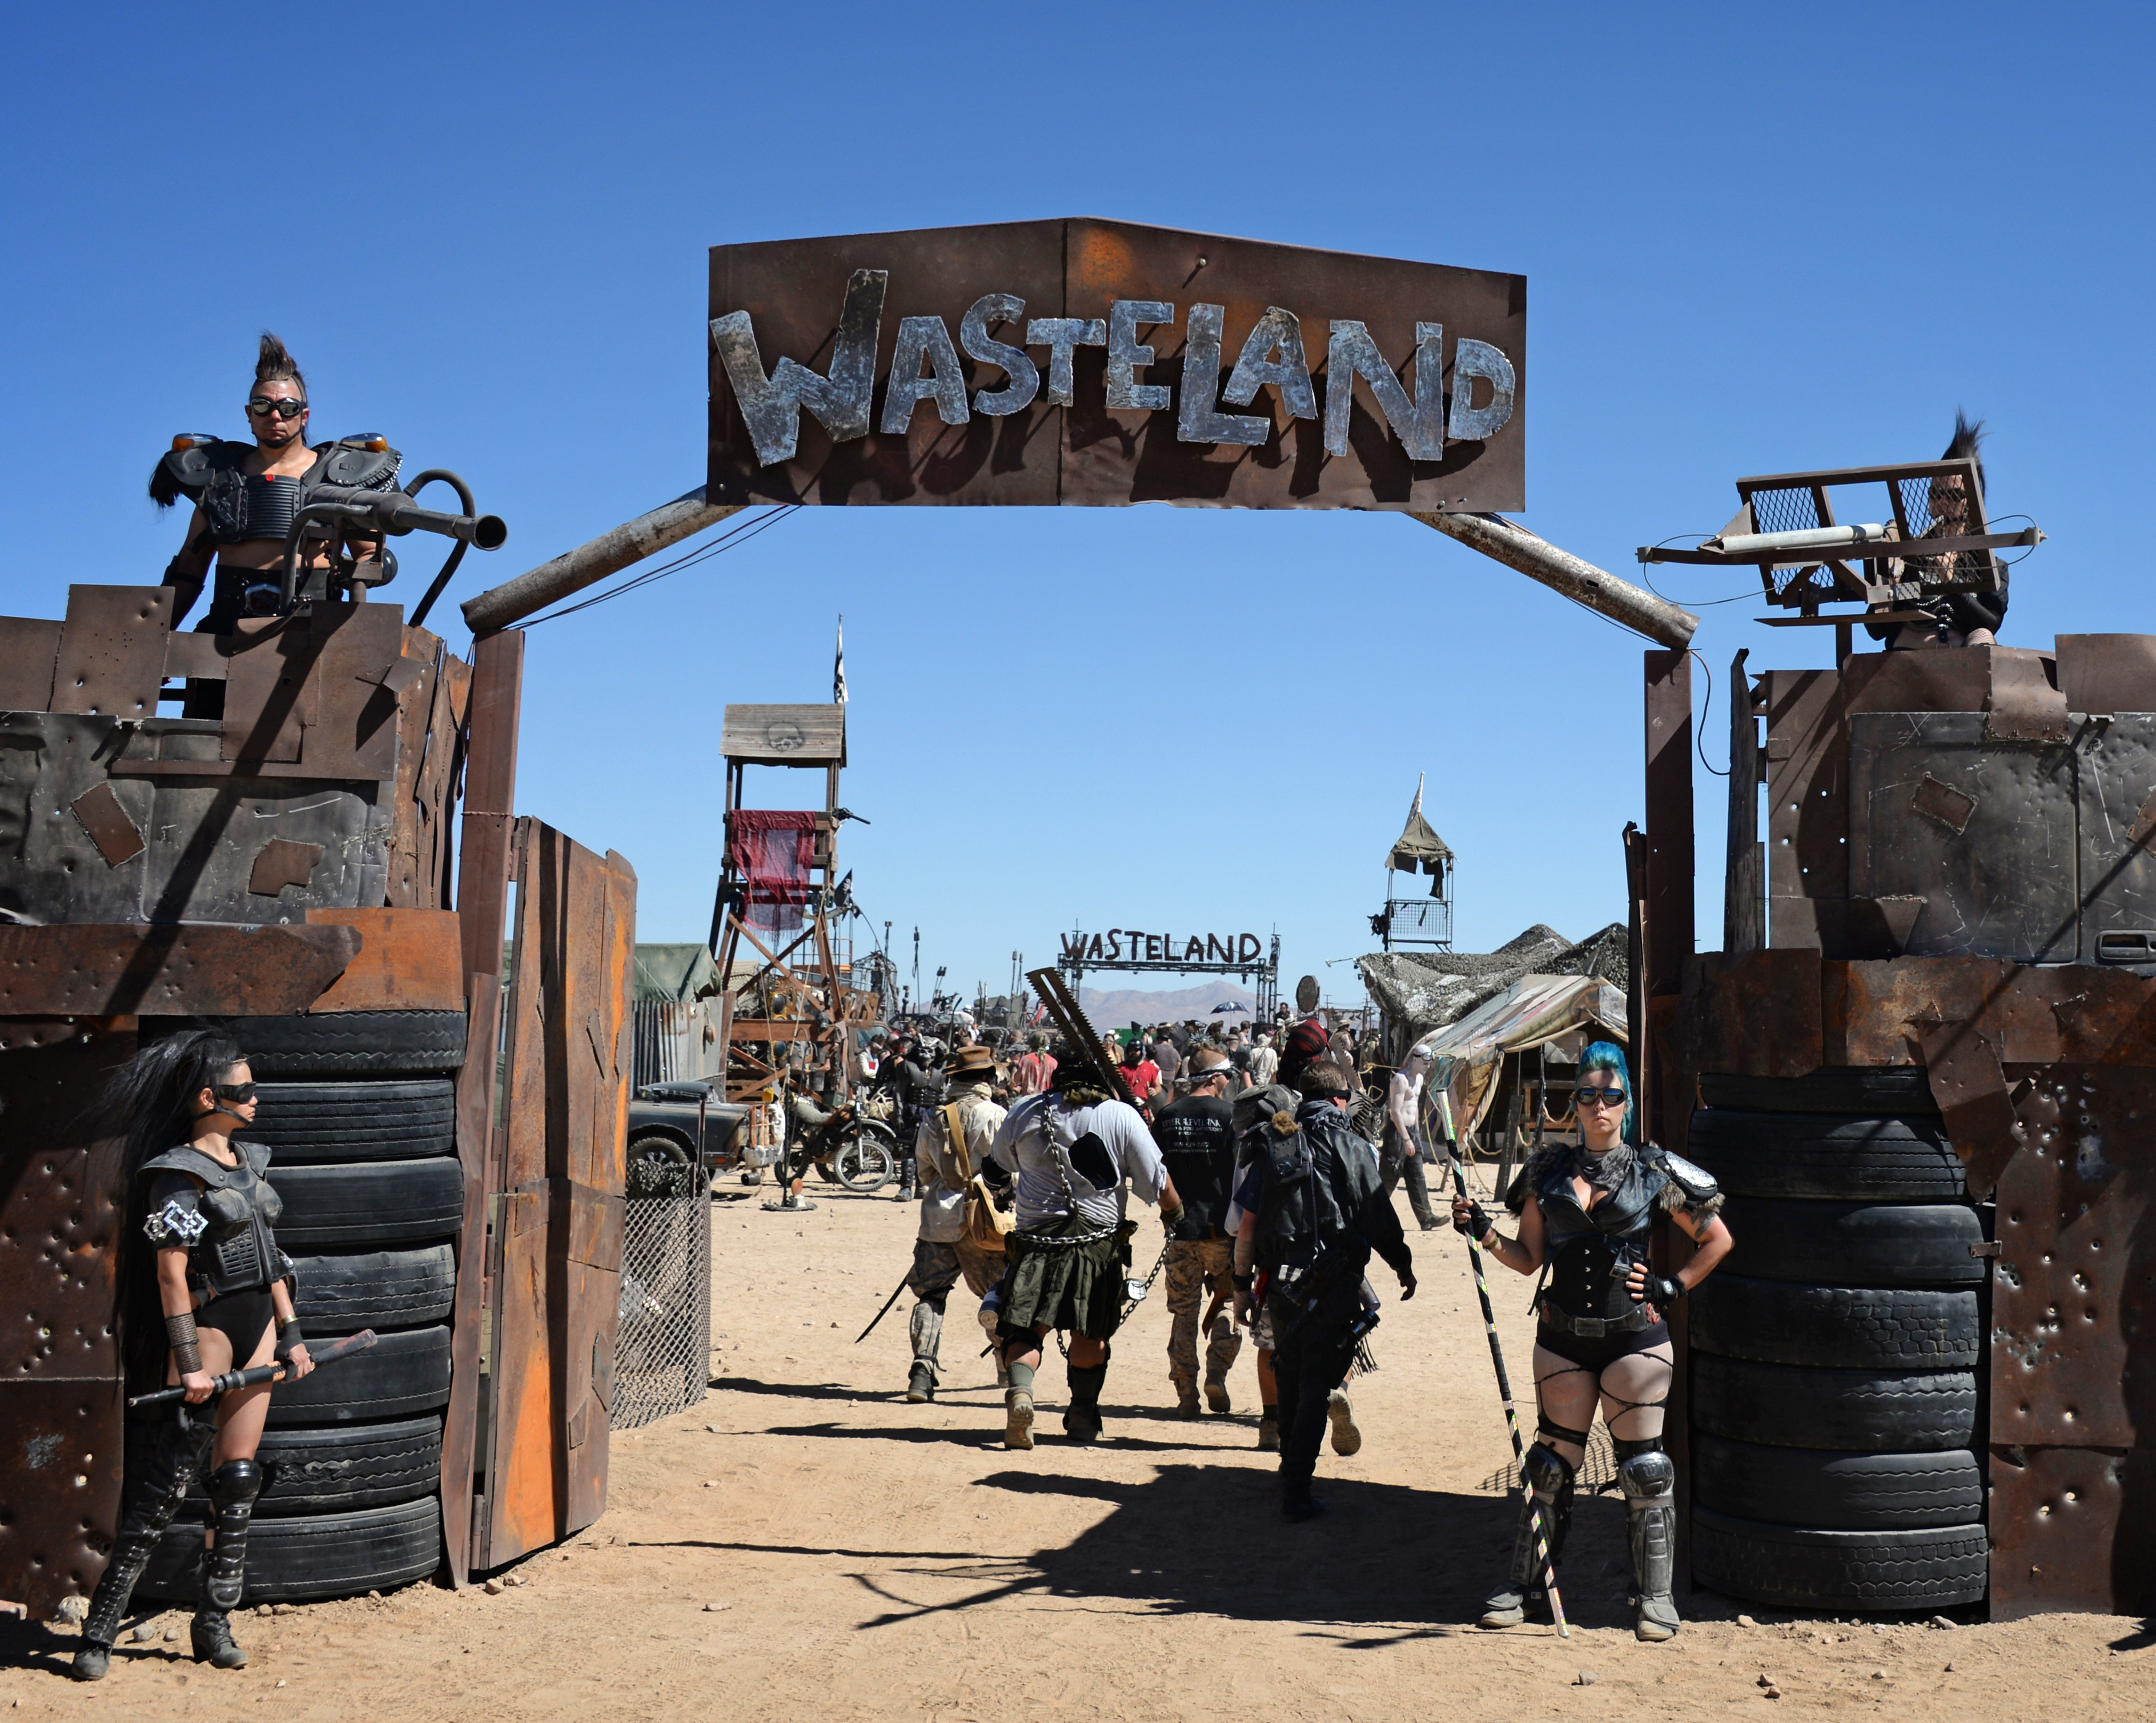 festival wasteland